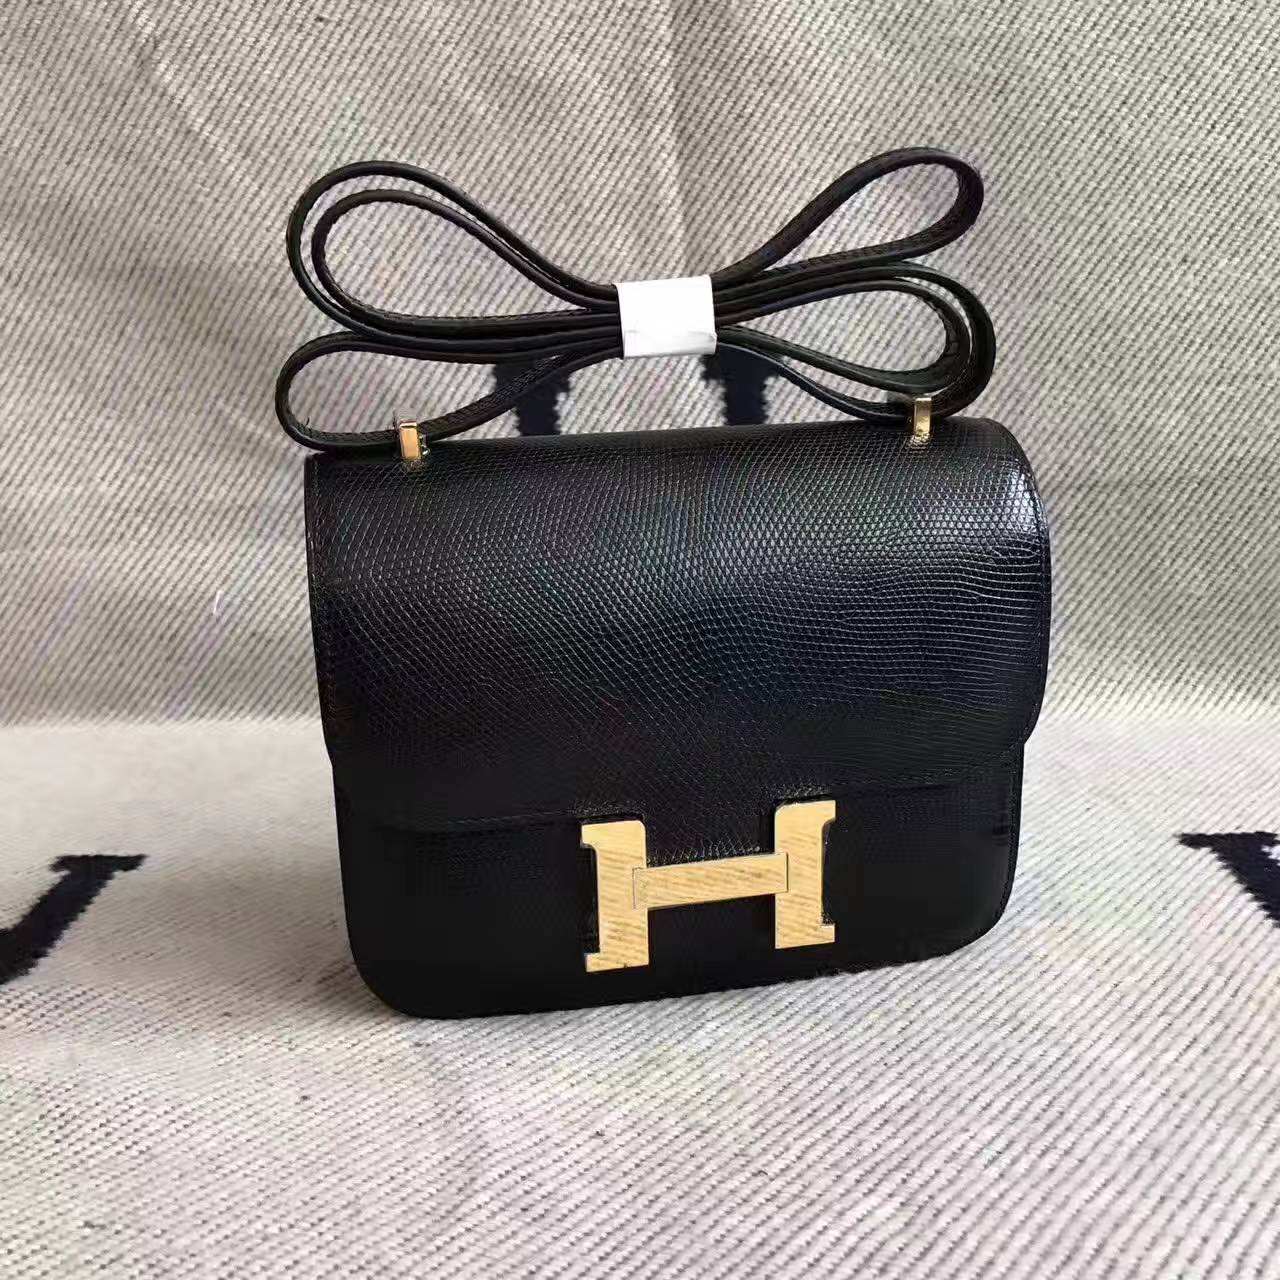 Cheap Hermes Constance Bag 24cm in CK89 Black Lizard Skin Leather